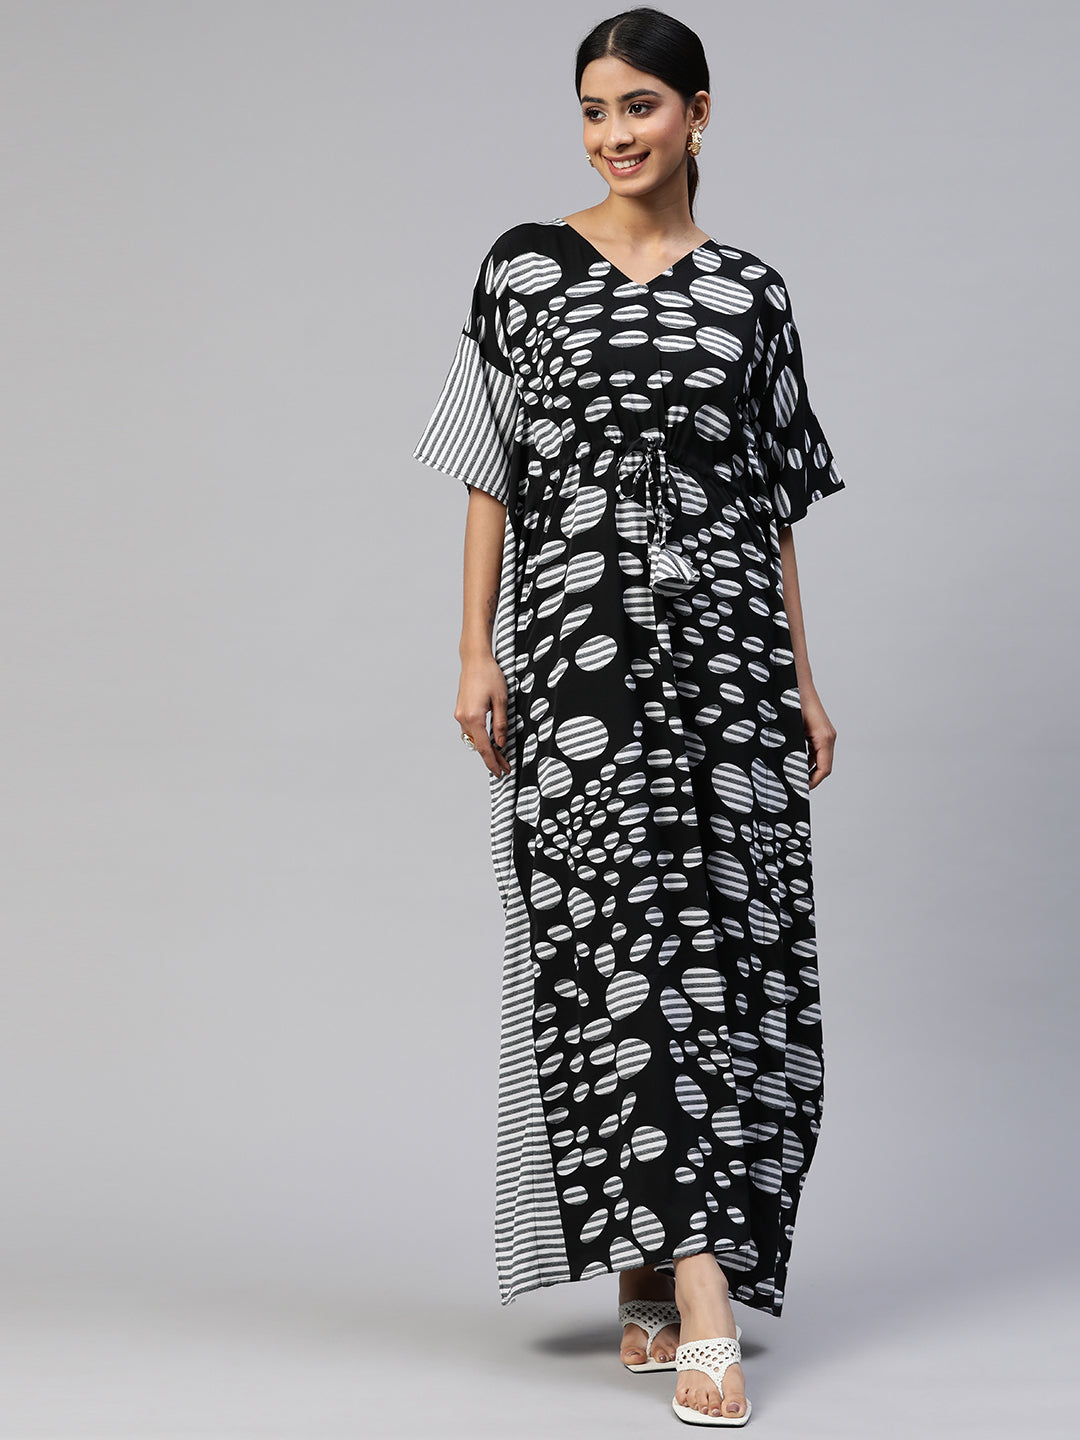 Buy Black multi color embroidered kaftan maxi dress for women – Mukul